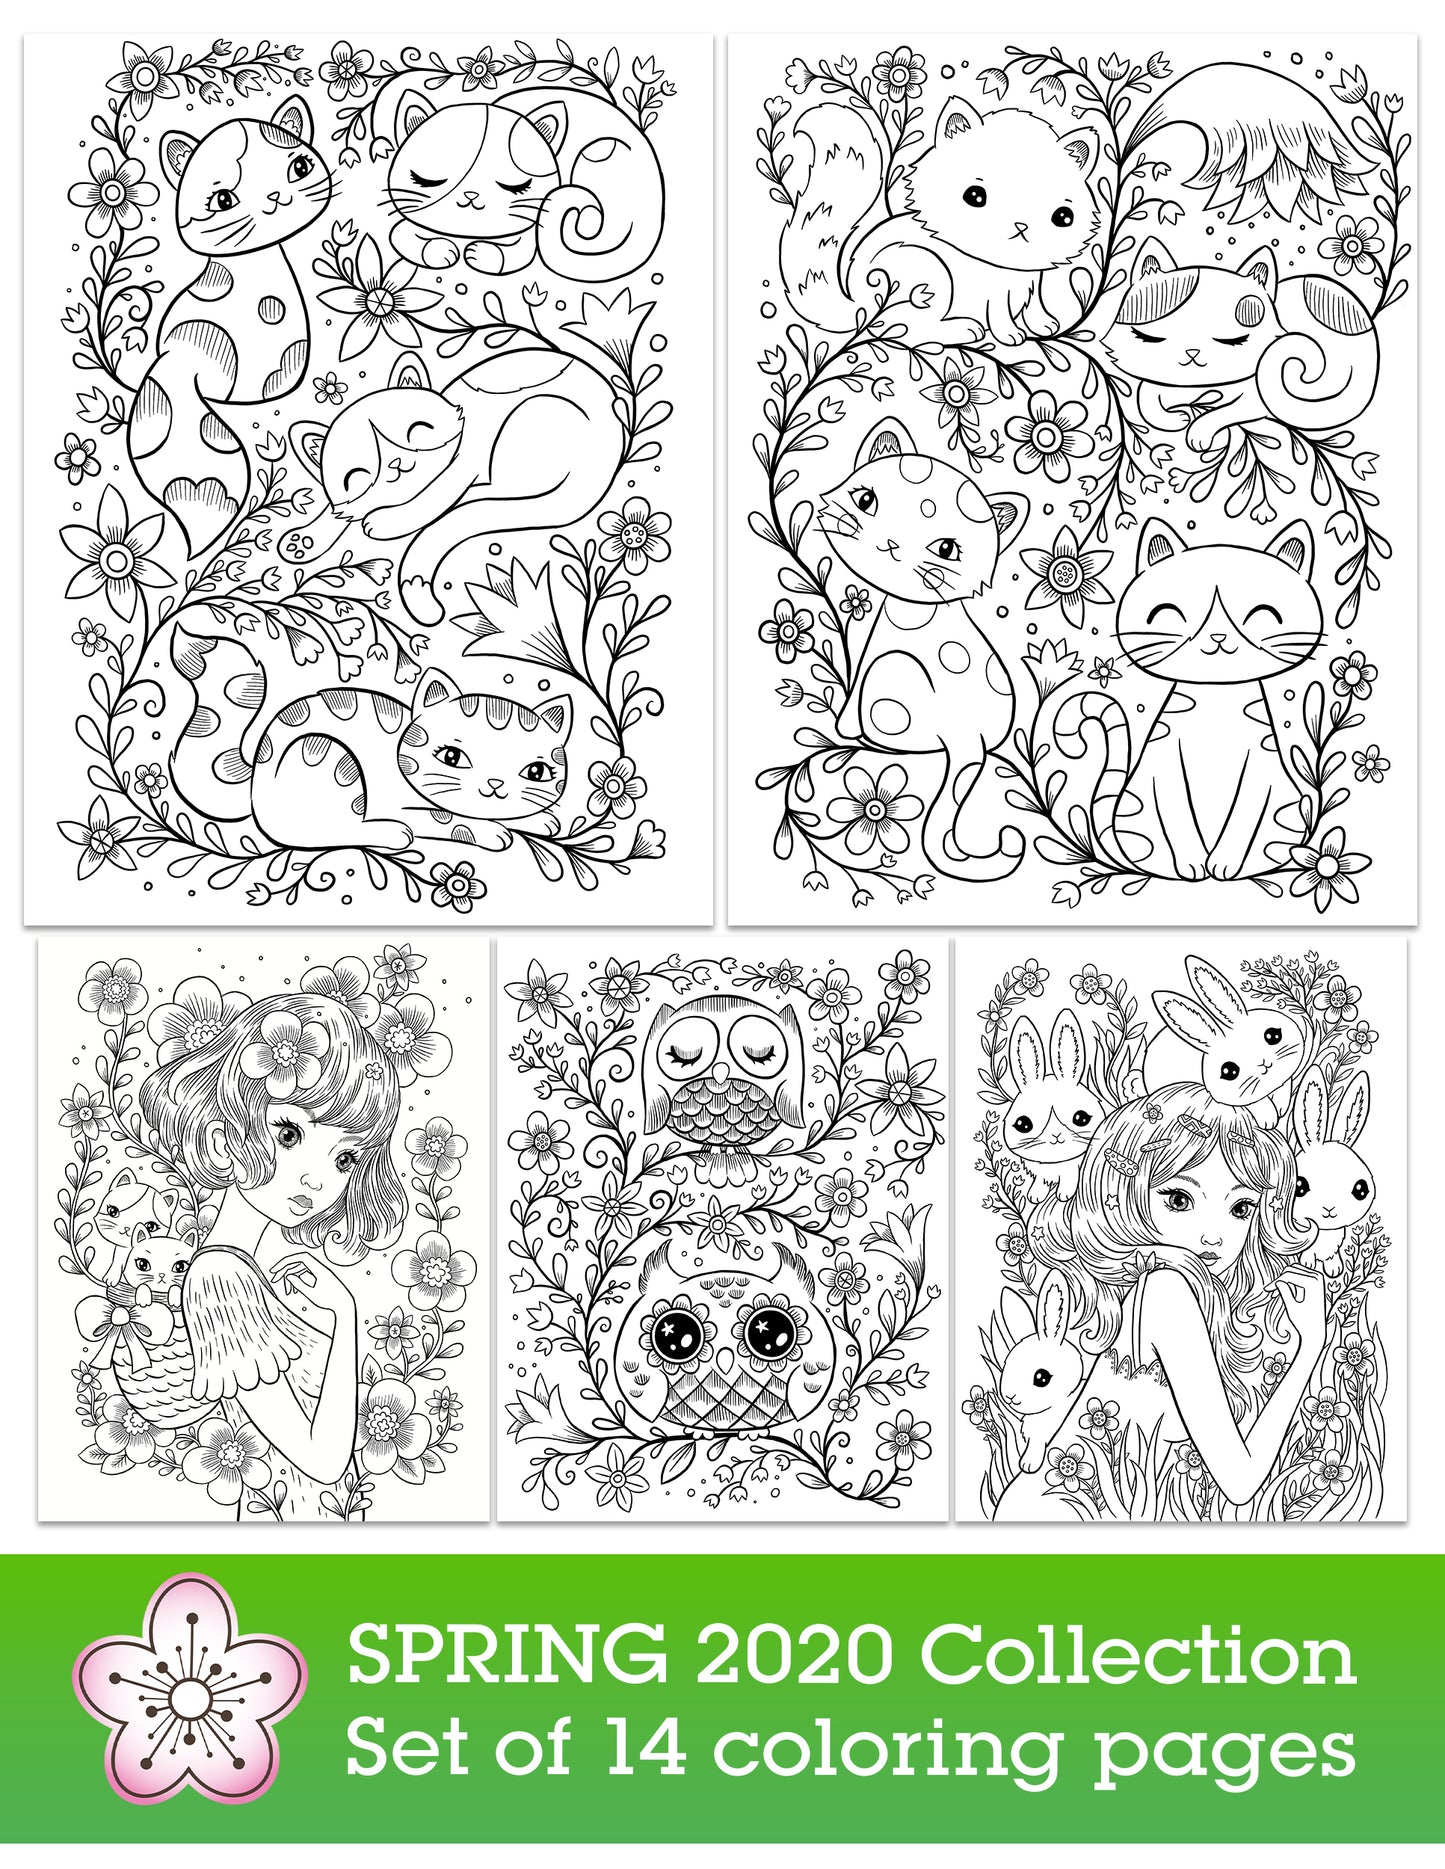 Spring 2020 coloring collection | Jeremiah Ketner | Instant Download pdf